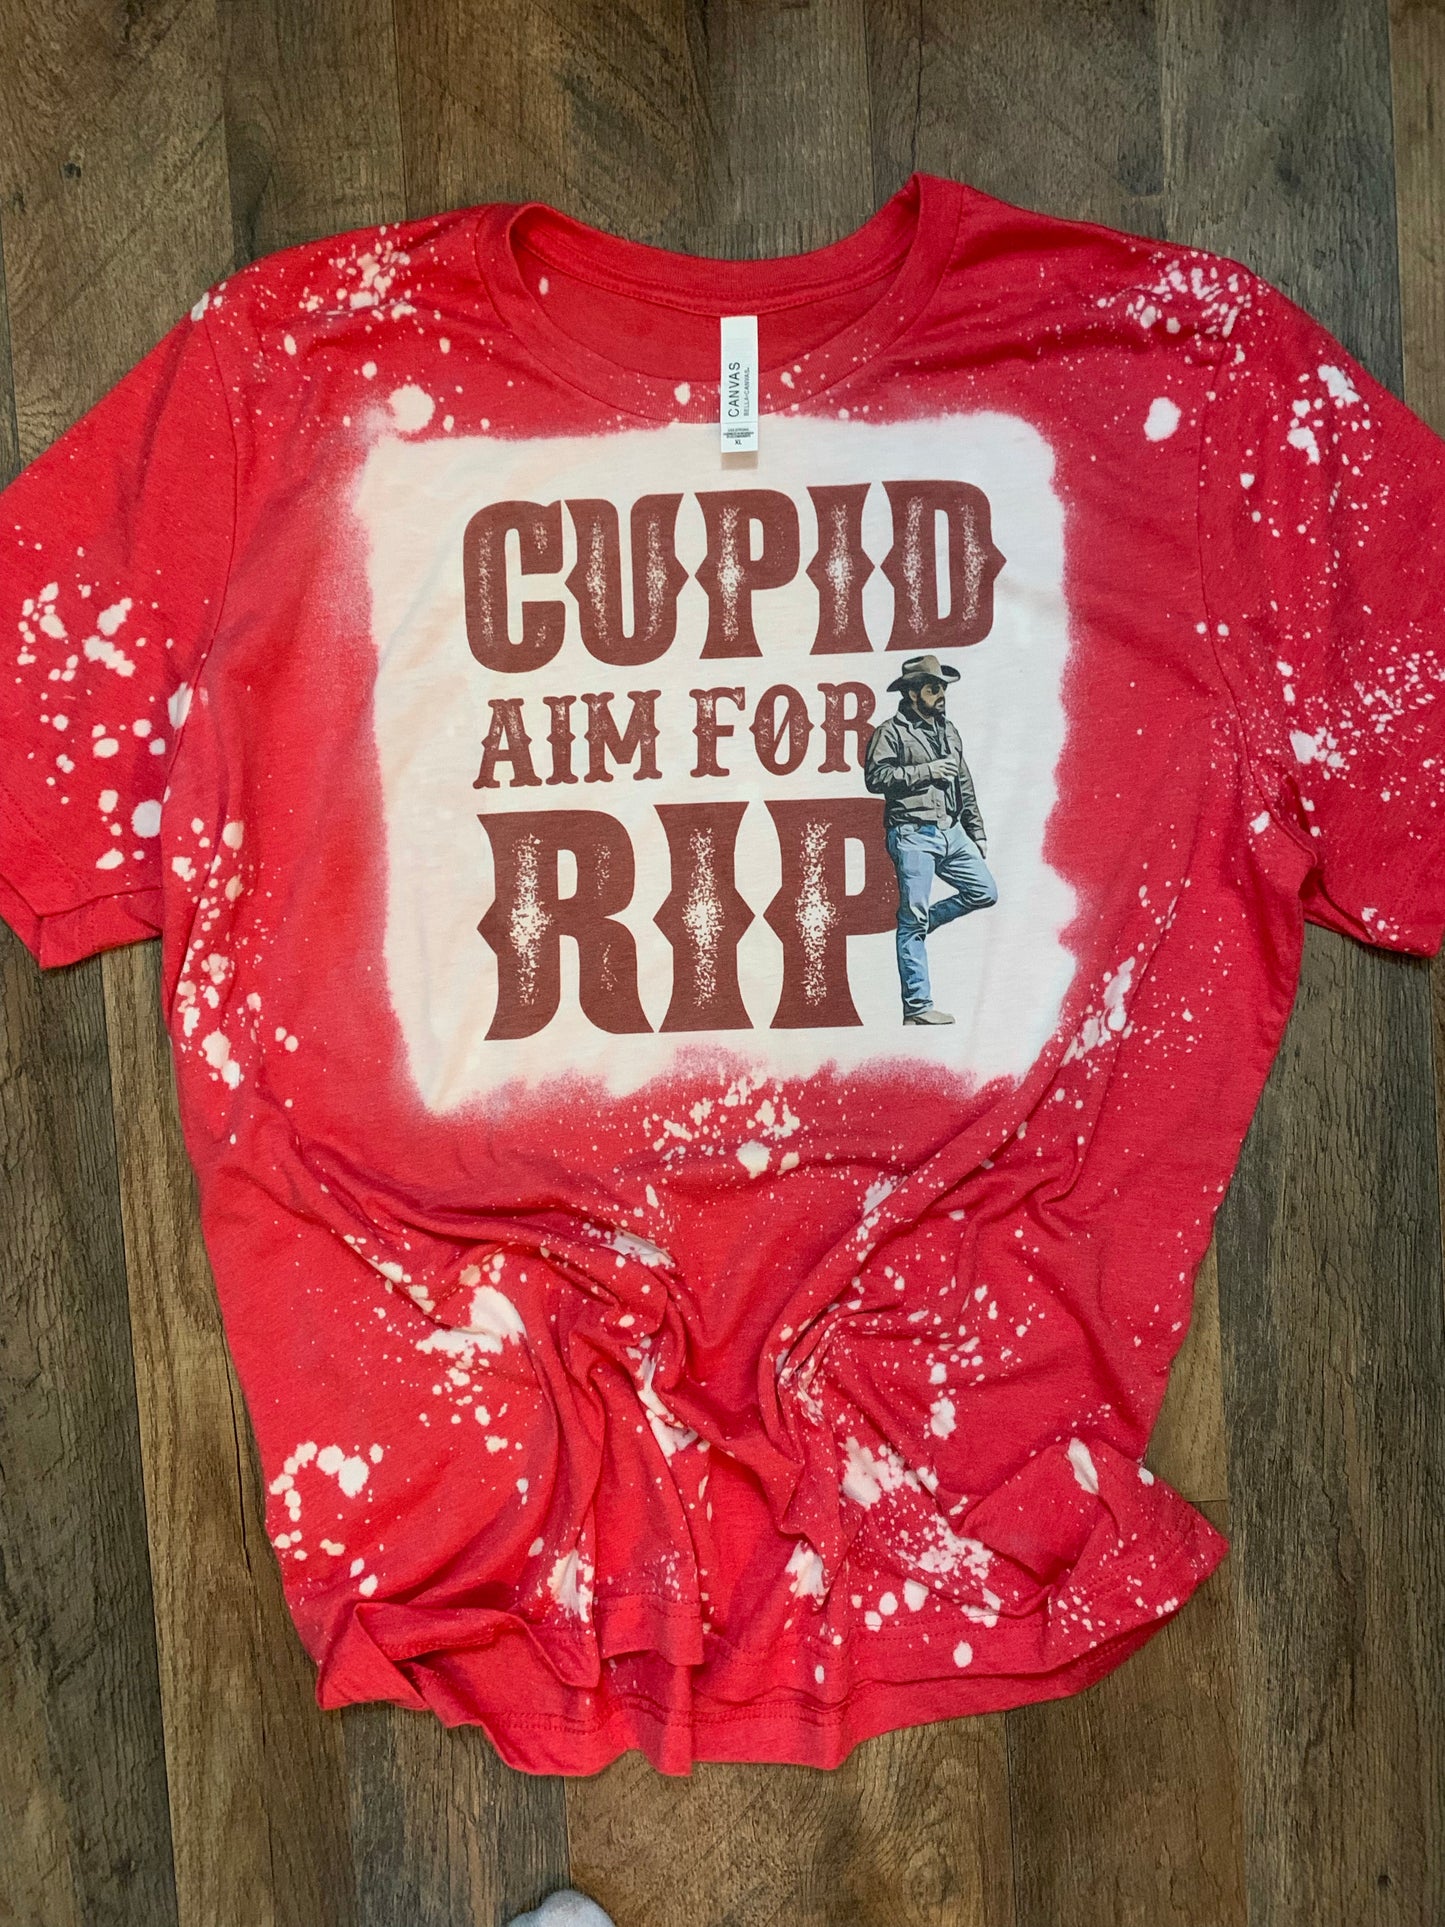 Cupid Aim For Rip Bleached T-Shirt {Regular & Plus}